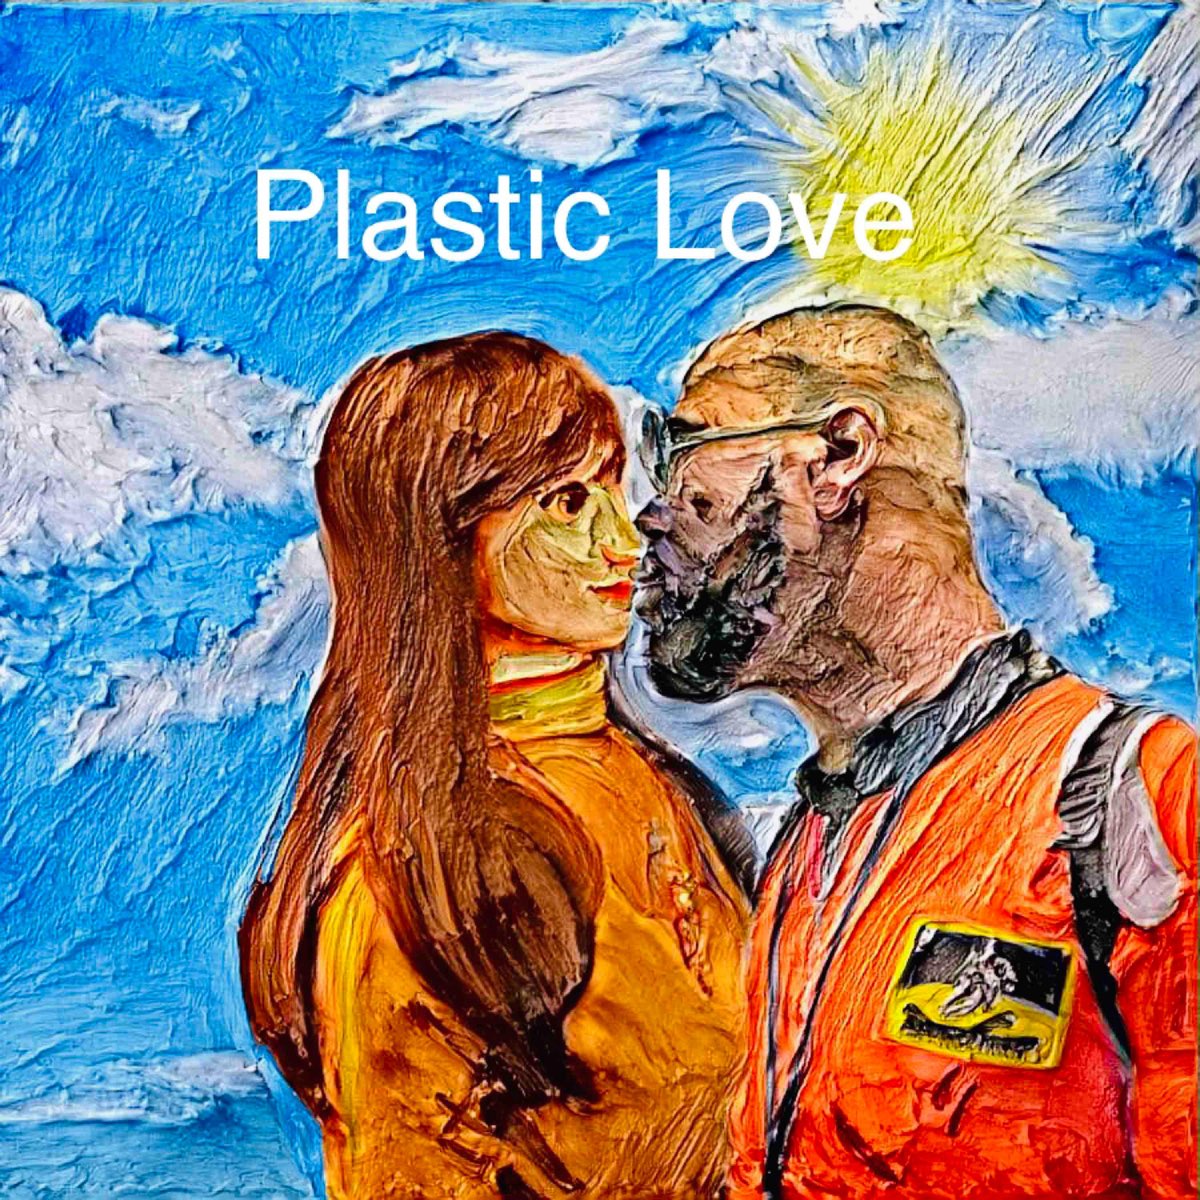 Слушайте песни, в том числе "Plastic Love". 